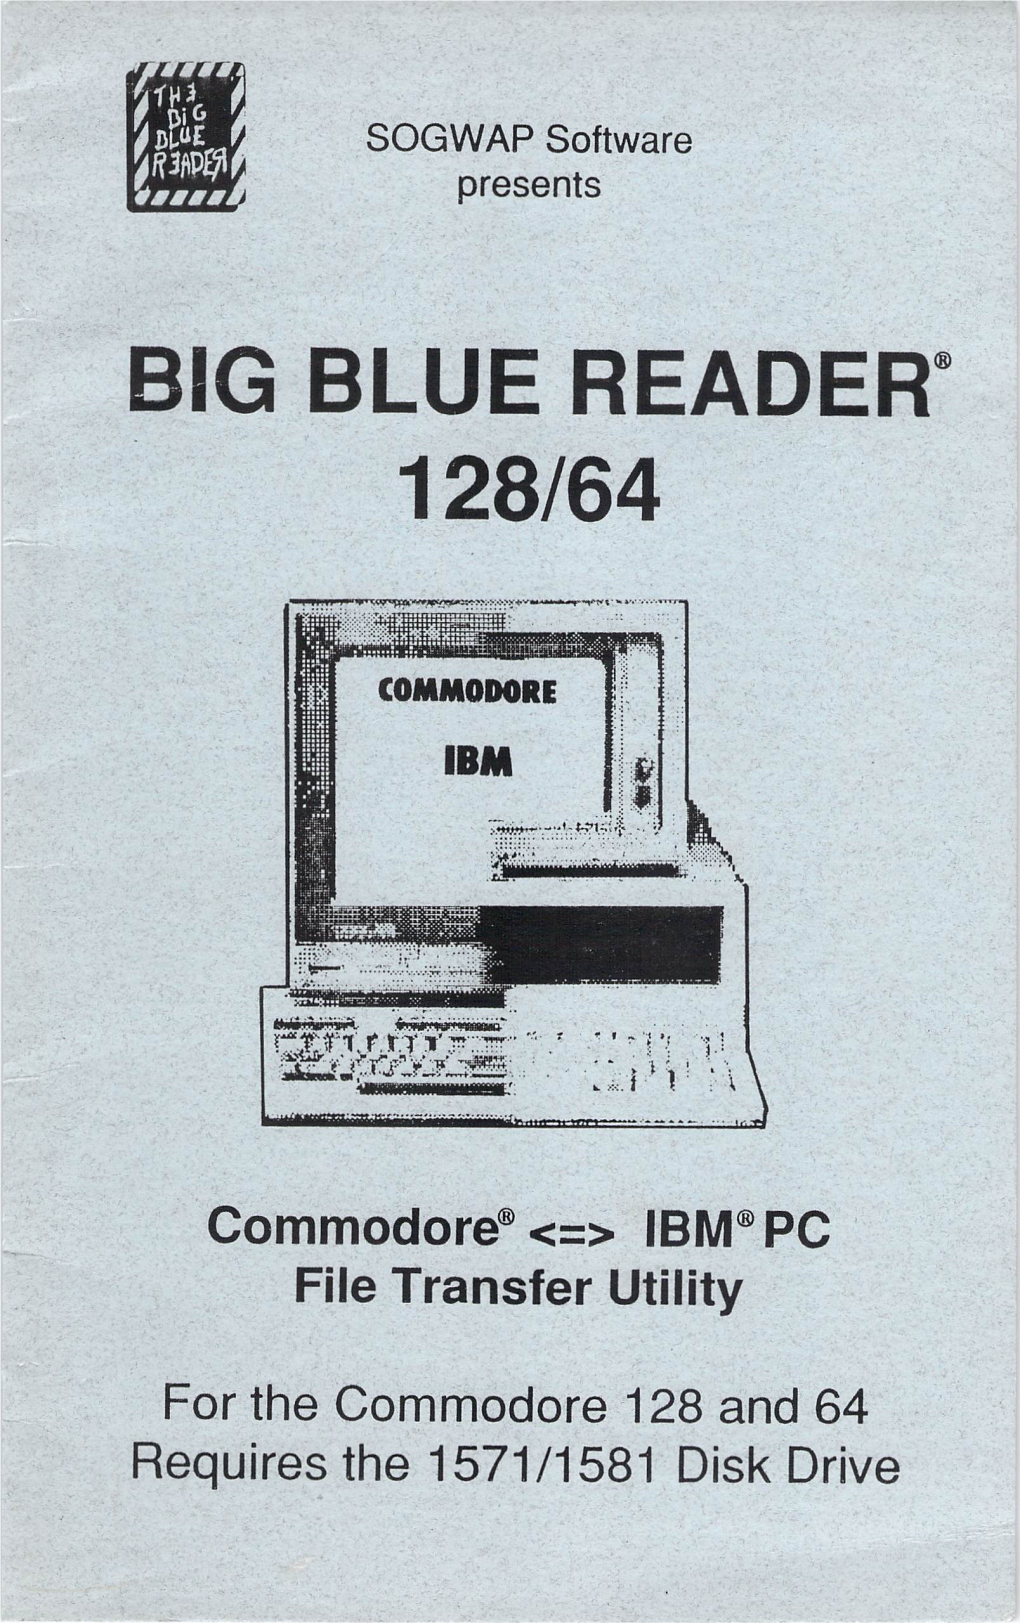 Big Blue Reader® 128/64